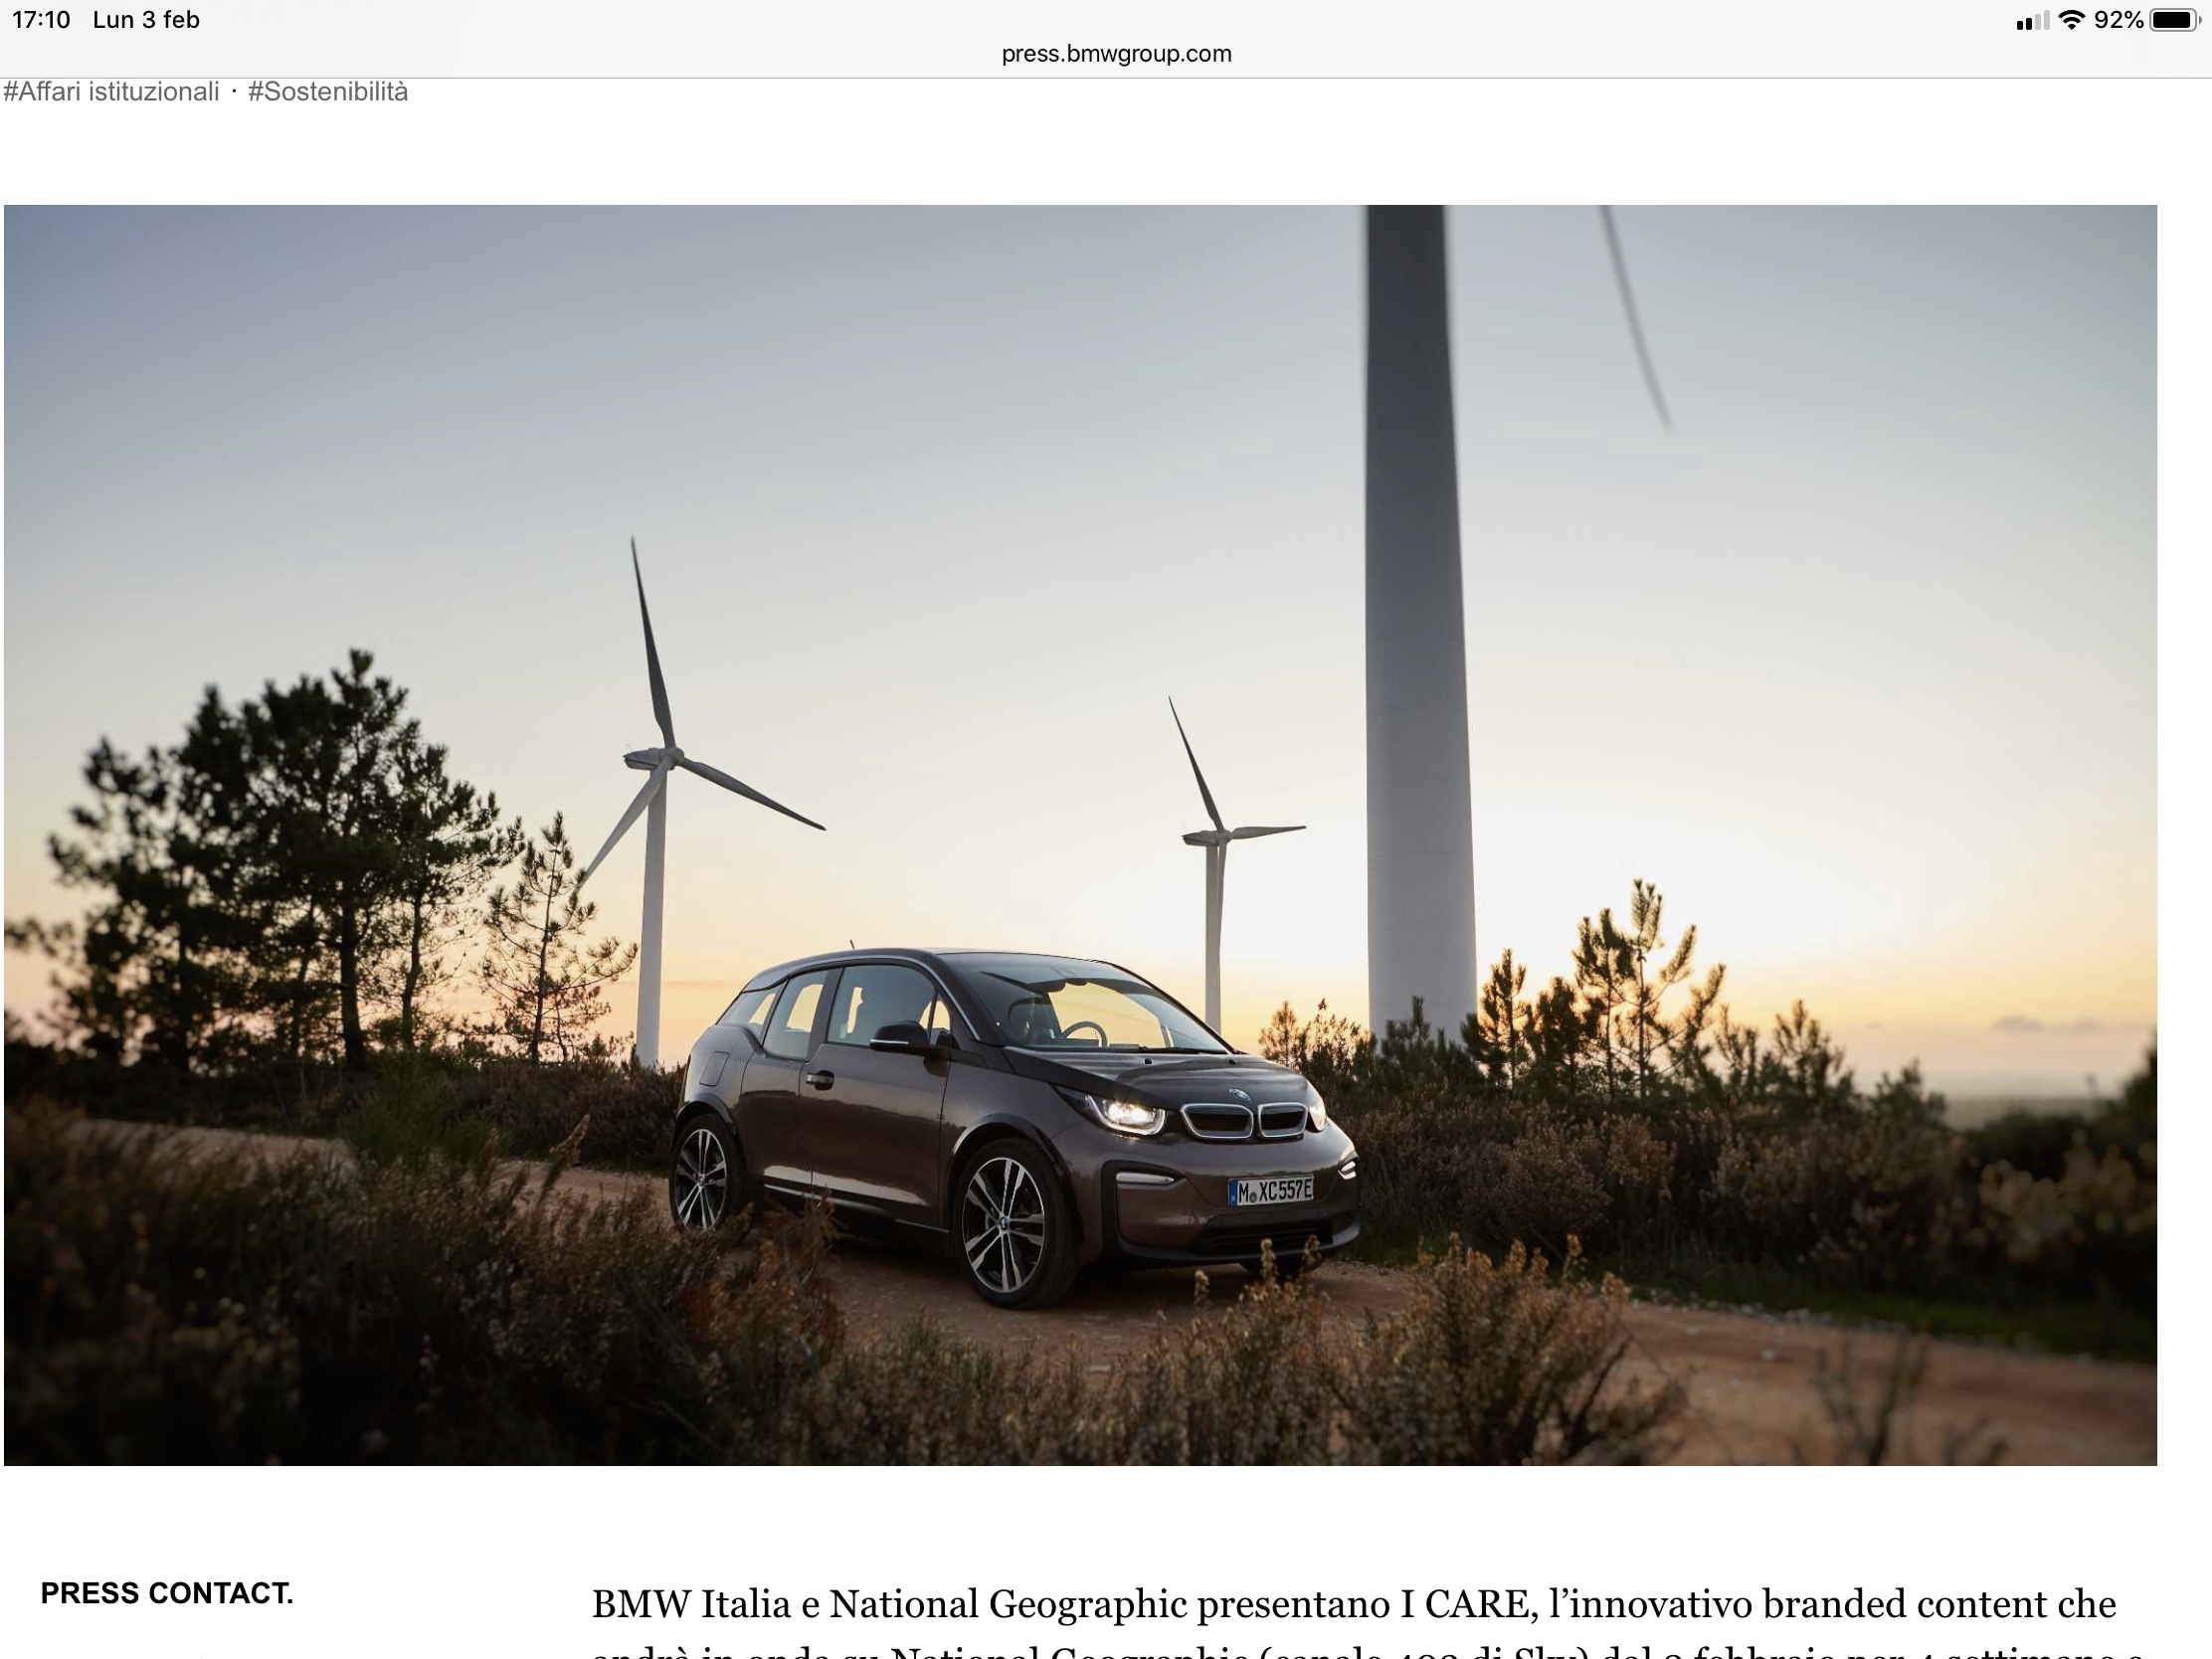 BMW Italia e National Geographic insieme nel branded content I CARE